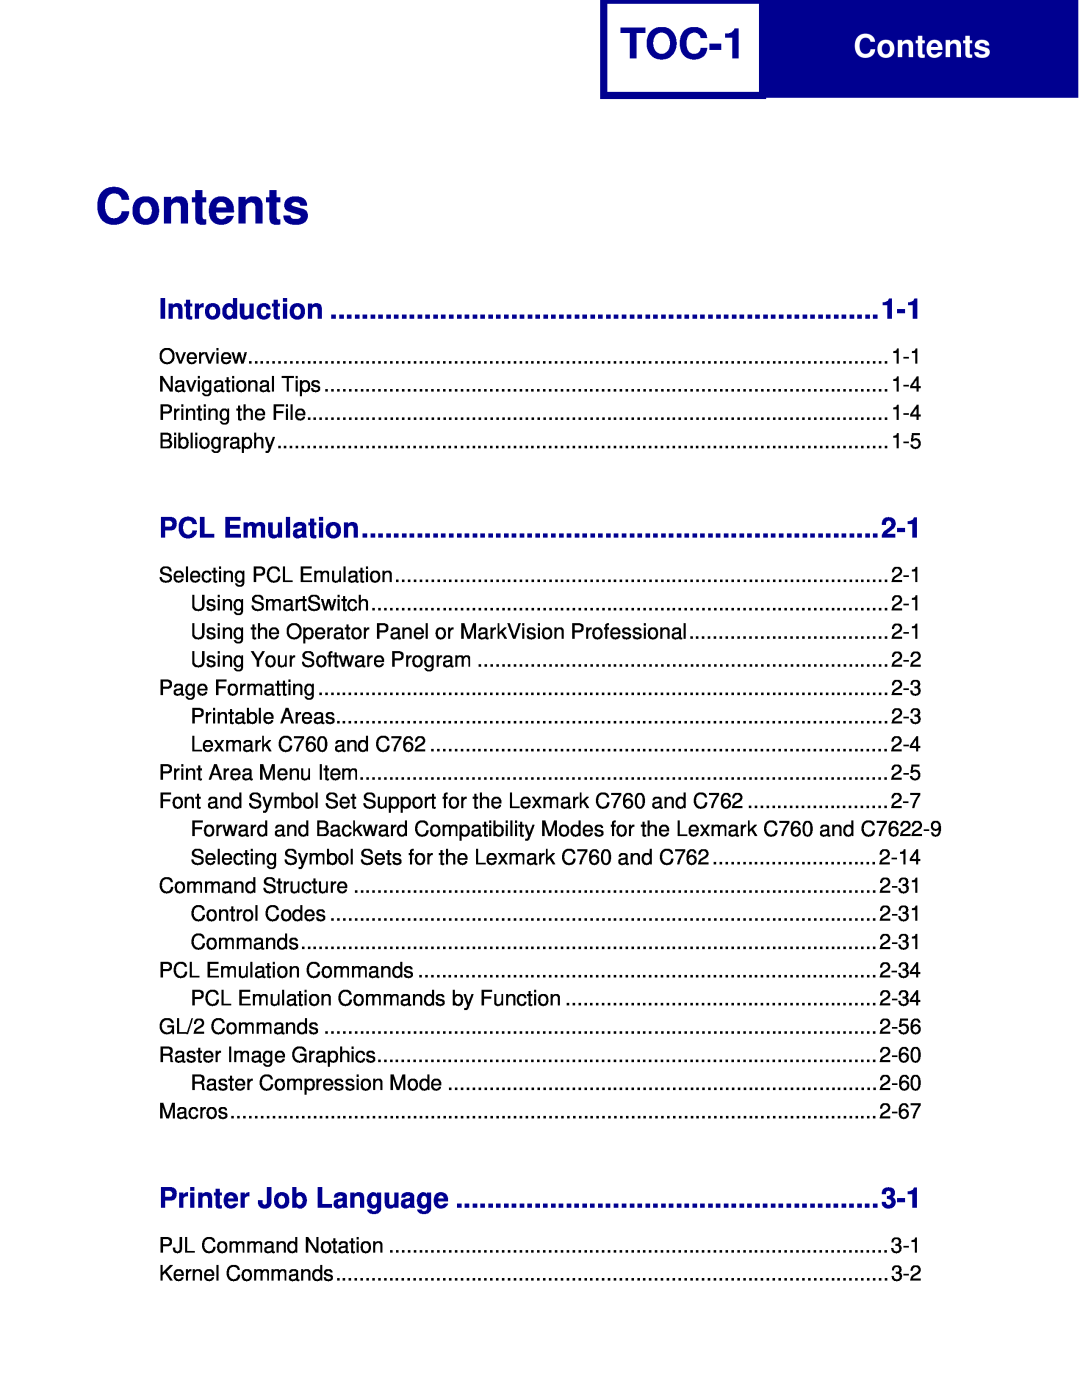 Lexmark C760, C762 manual Contents, TOC-1, PCL Emulation, Introduction, Printer Job Language 